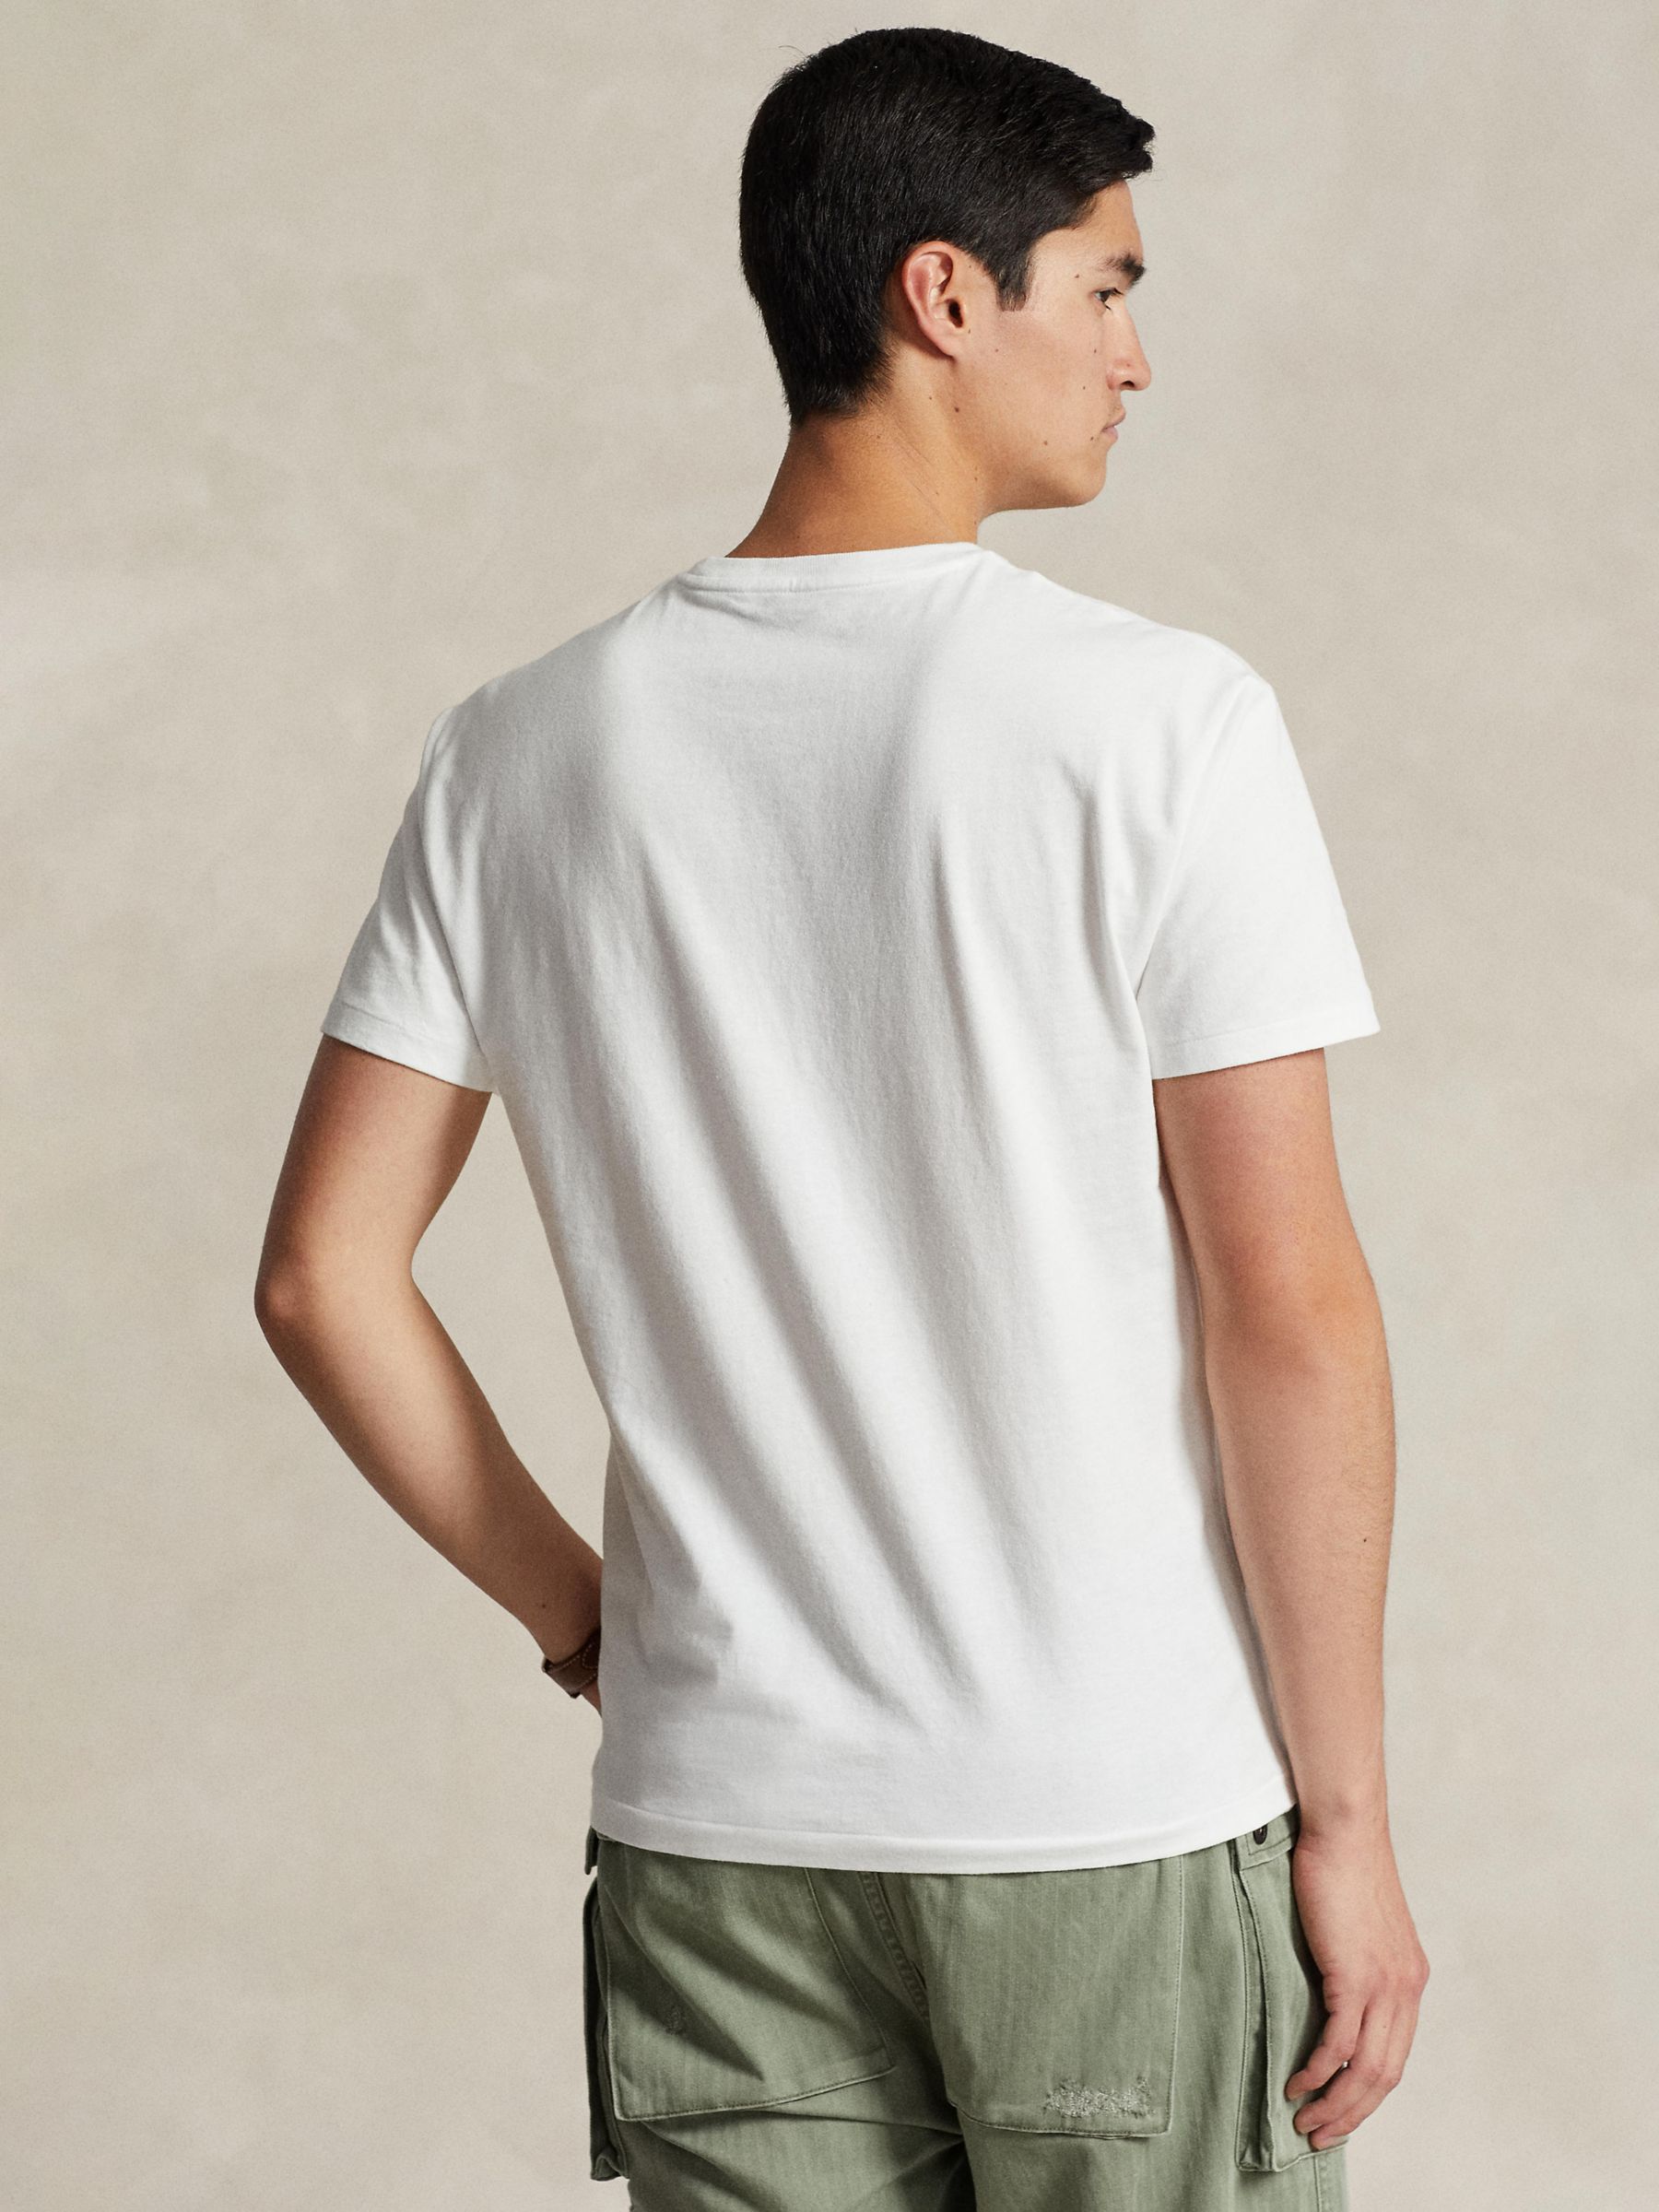 Ralph Lauren Classic Fit Graphic Jersey T-Shirt, Classic Oxford White, XL